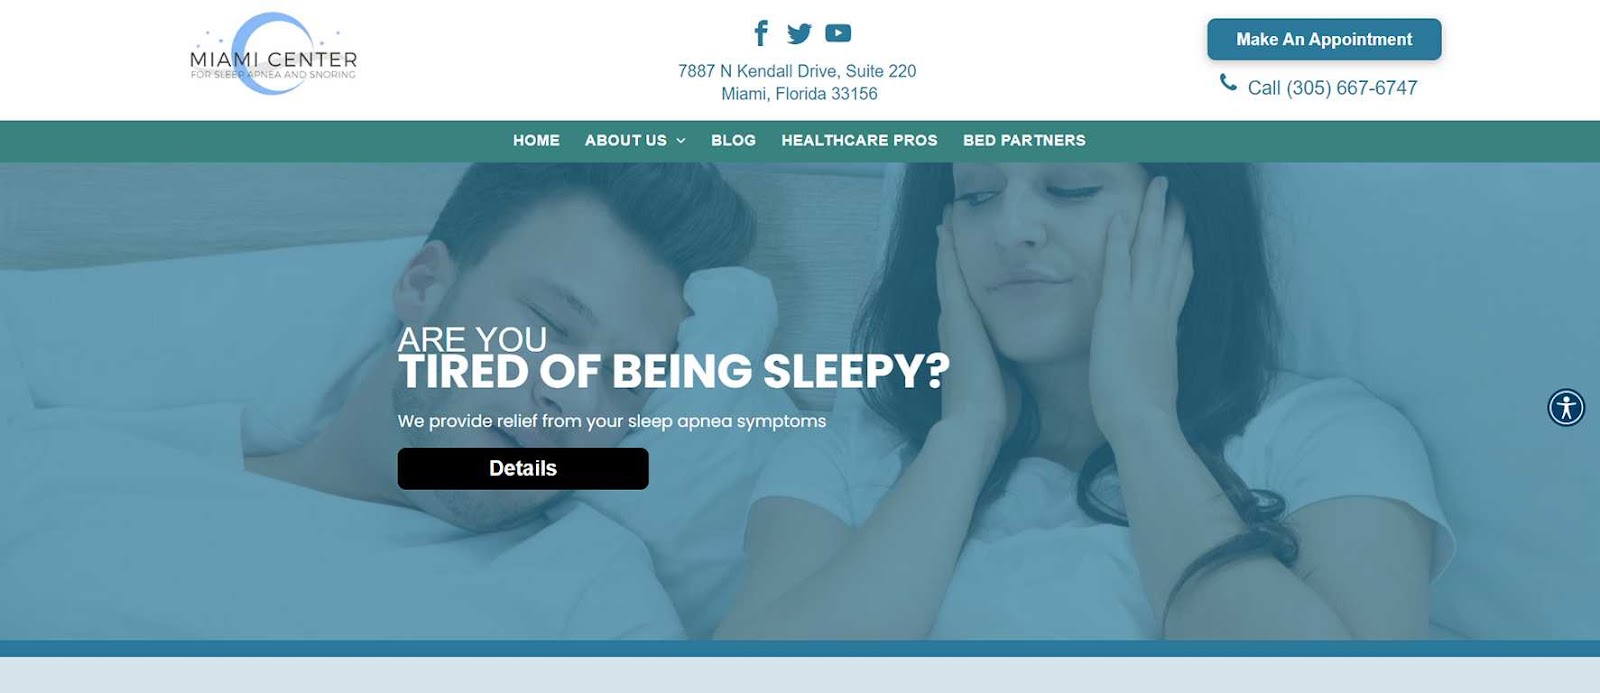 Miami Center for Sleep Apnea and Snoring